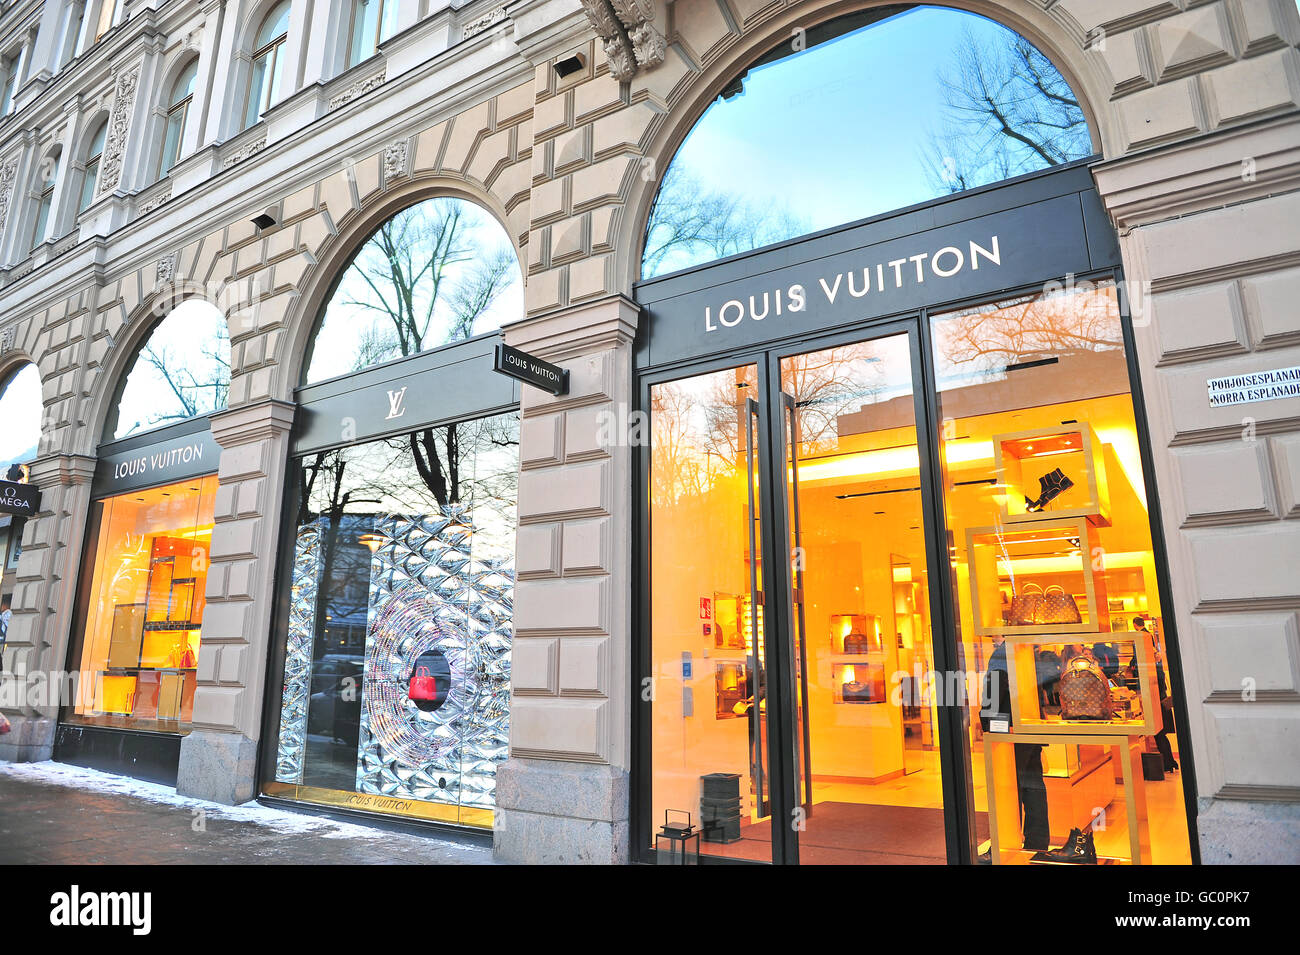 HELSINKI, FINLAND - JANUARY 4: Facade of Louis Vuitton store in Helsinki on January 4, 2016. Stock Photo